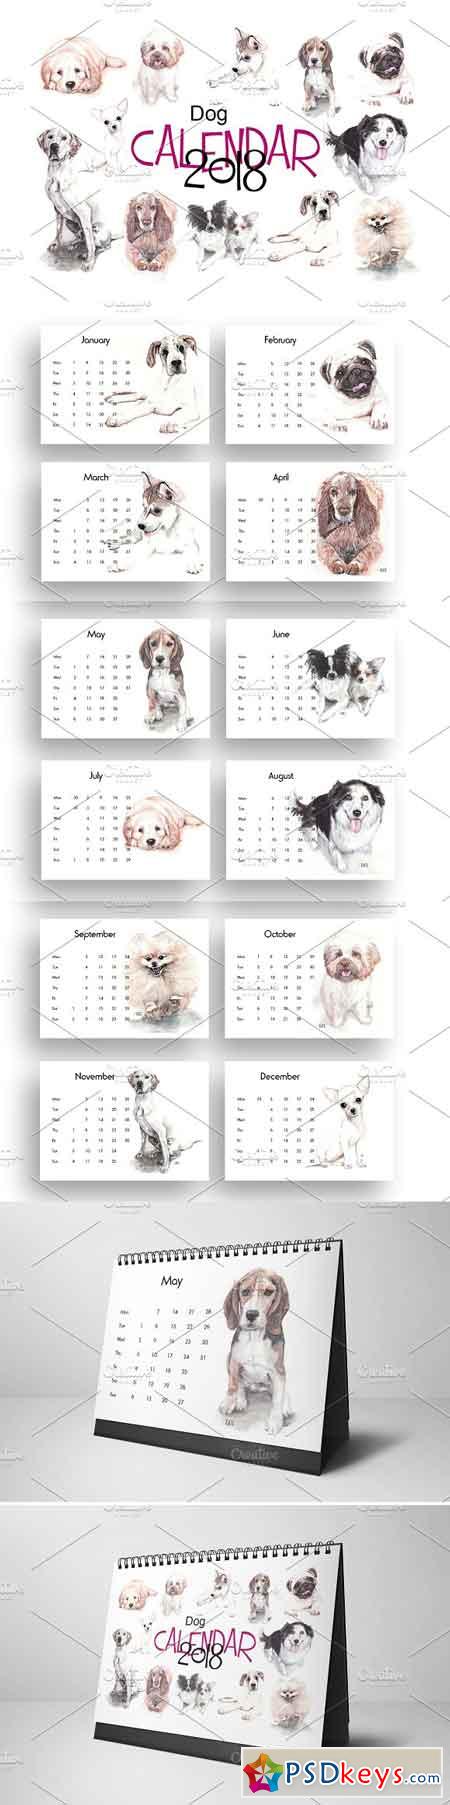 Dogs calendar 2018-19 2504950